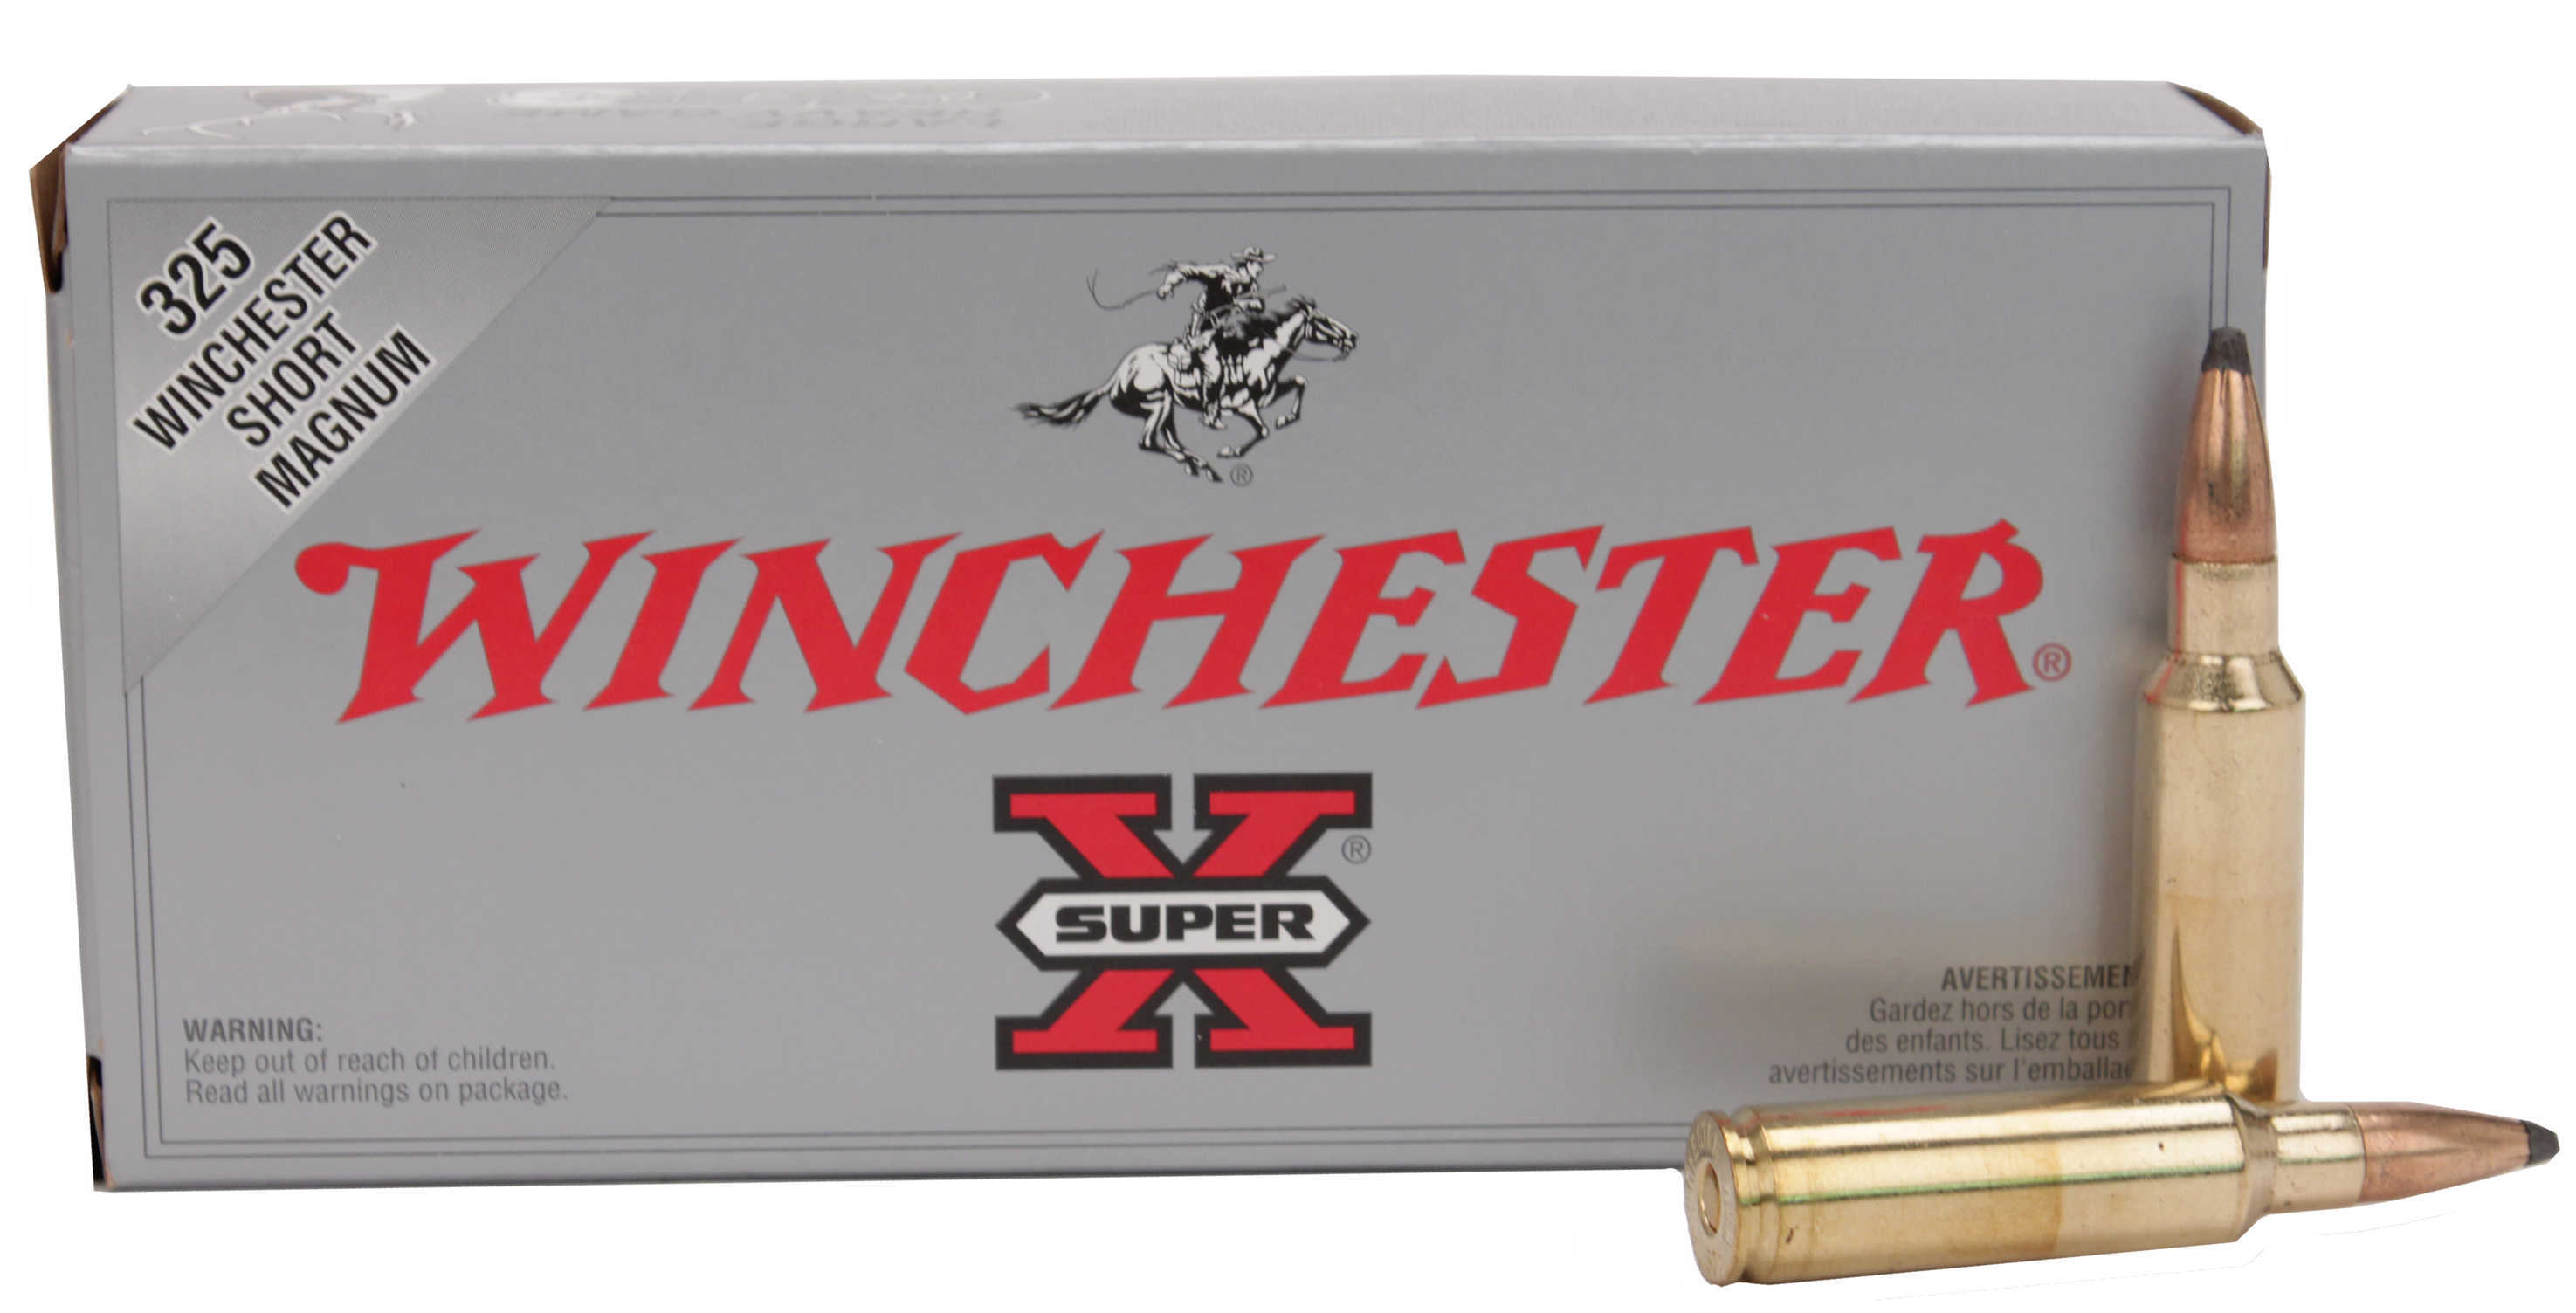 325 Winchester Short Magnum 20 Rounds Ammunition 220 Grain Soft Point